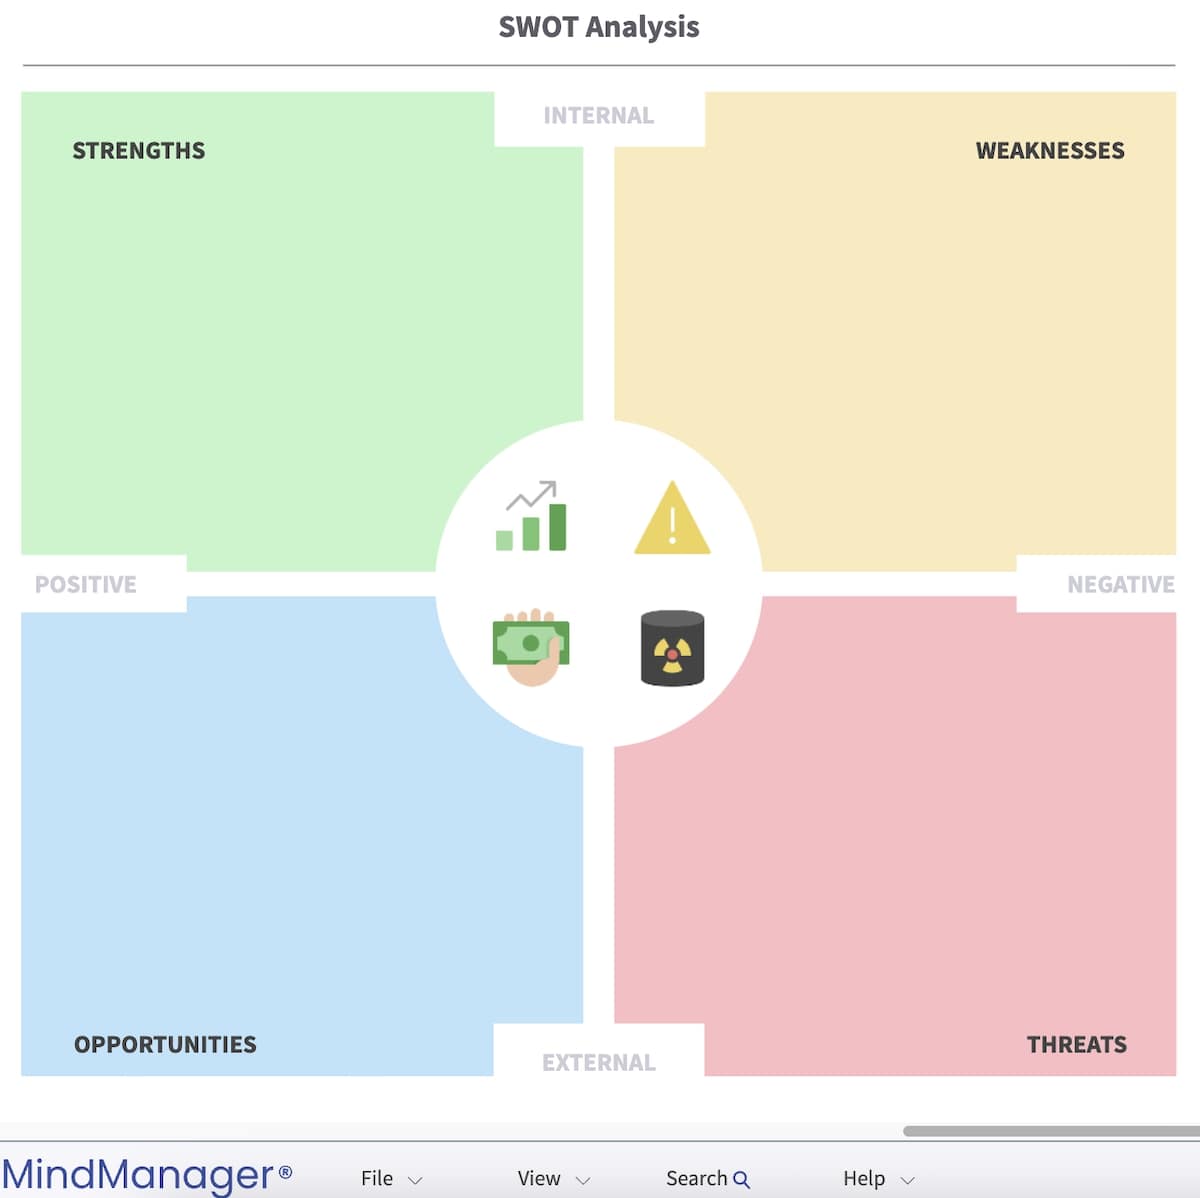 SWOT Analysis Software: MindManager SWOT Analysis blank template